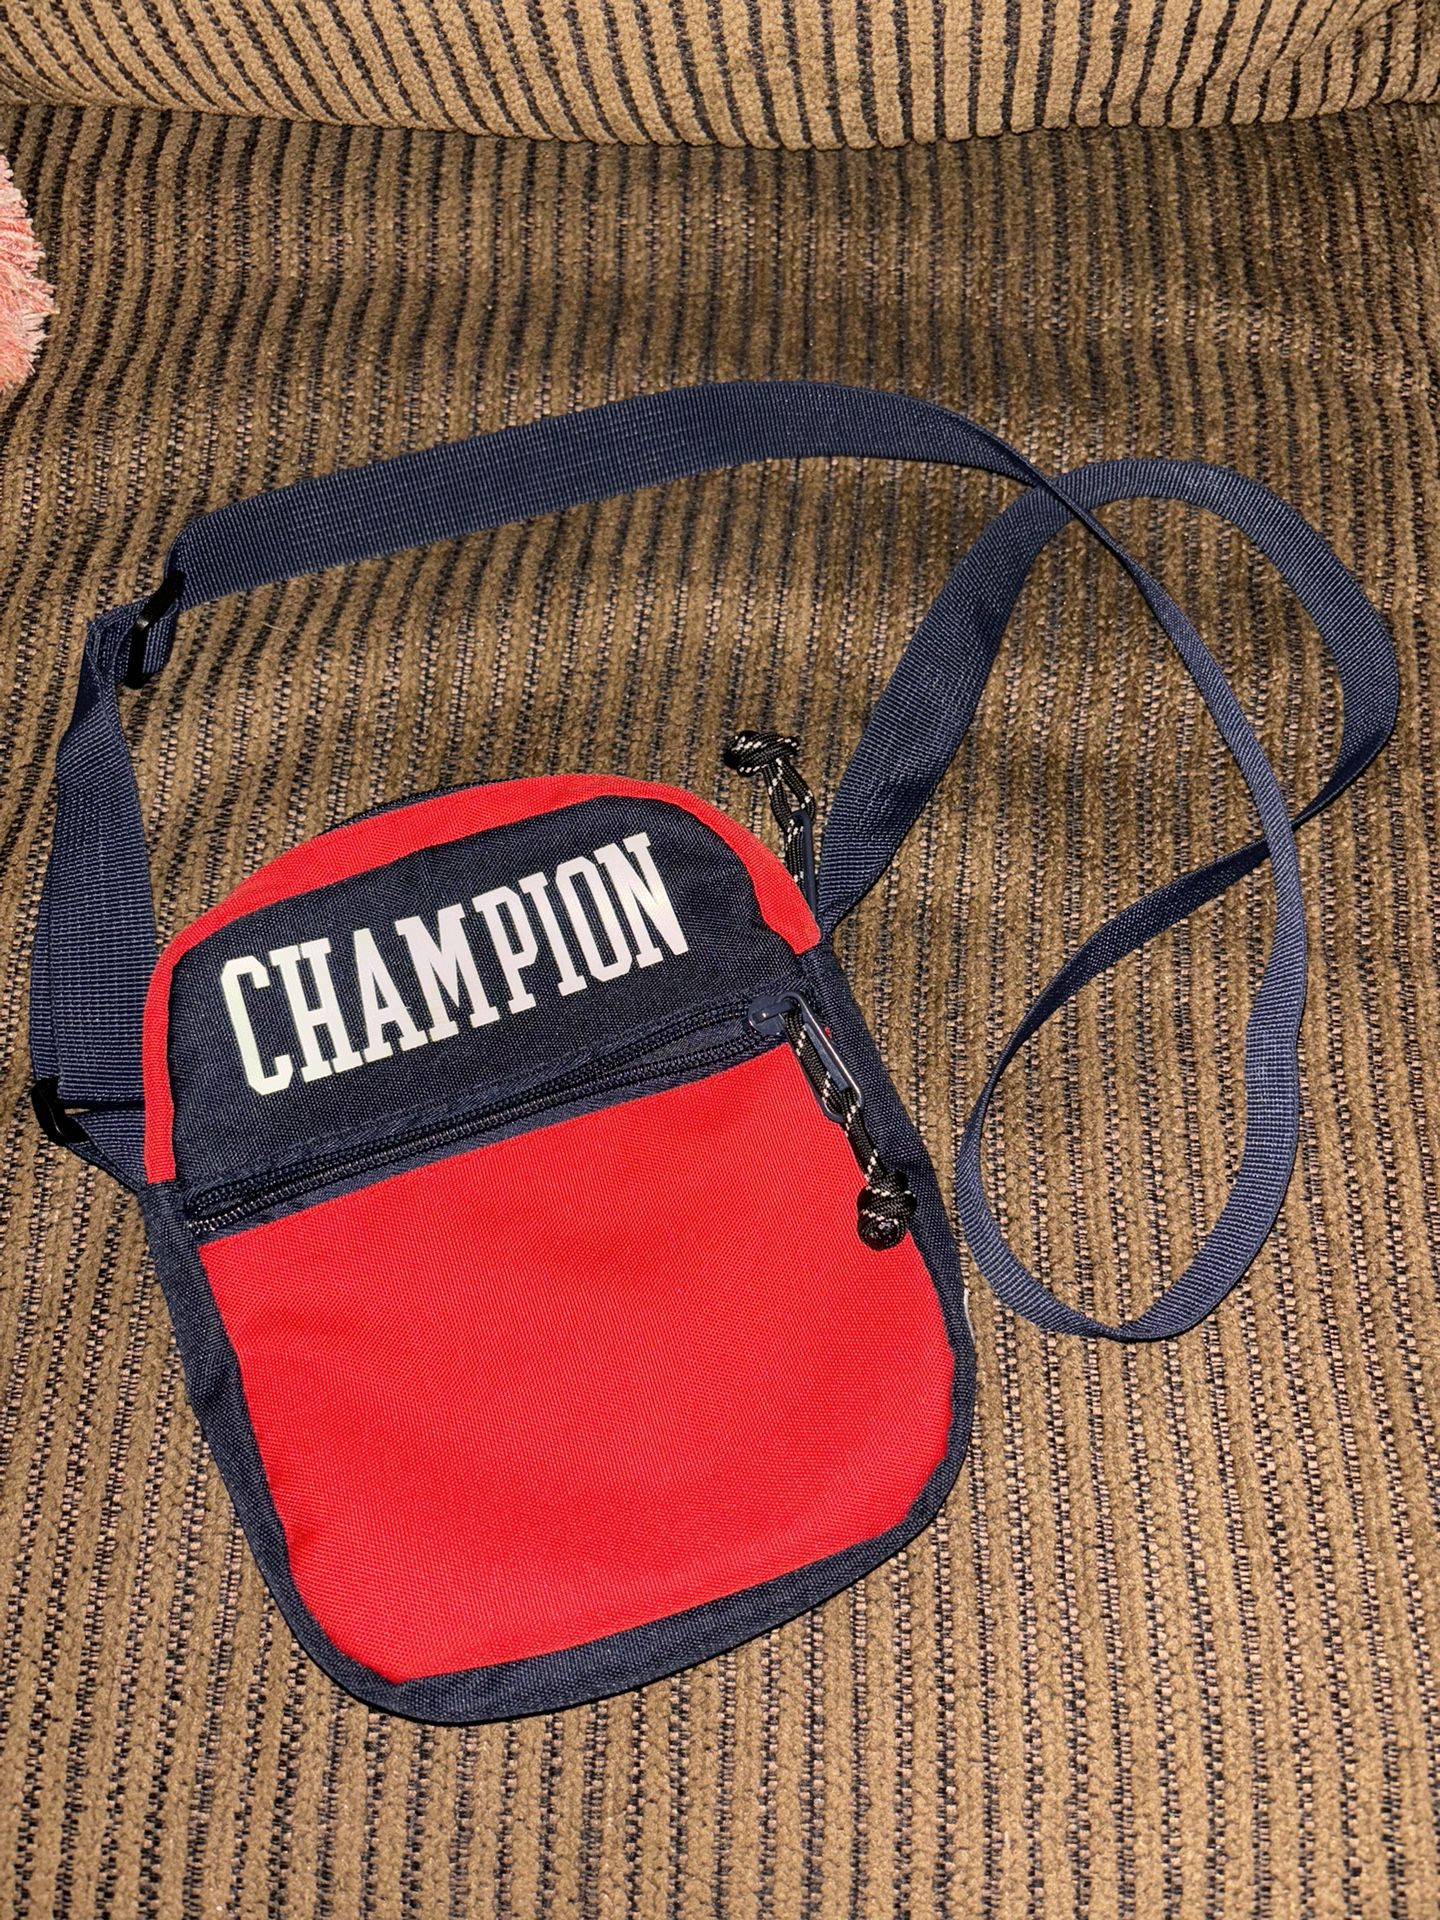 Champion Strap Bag